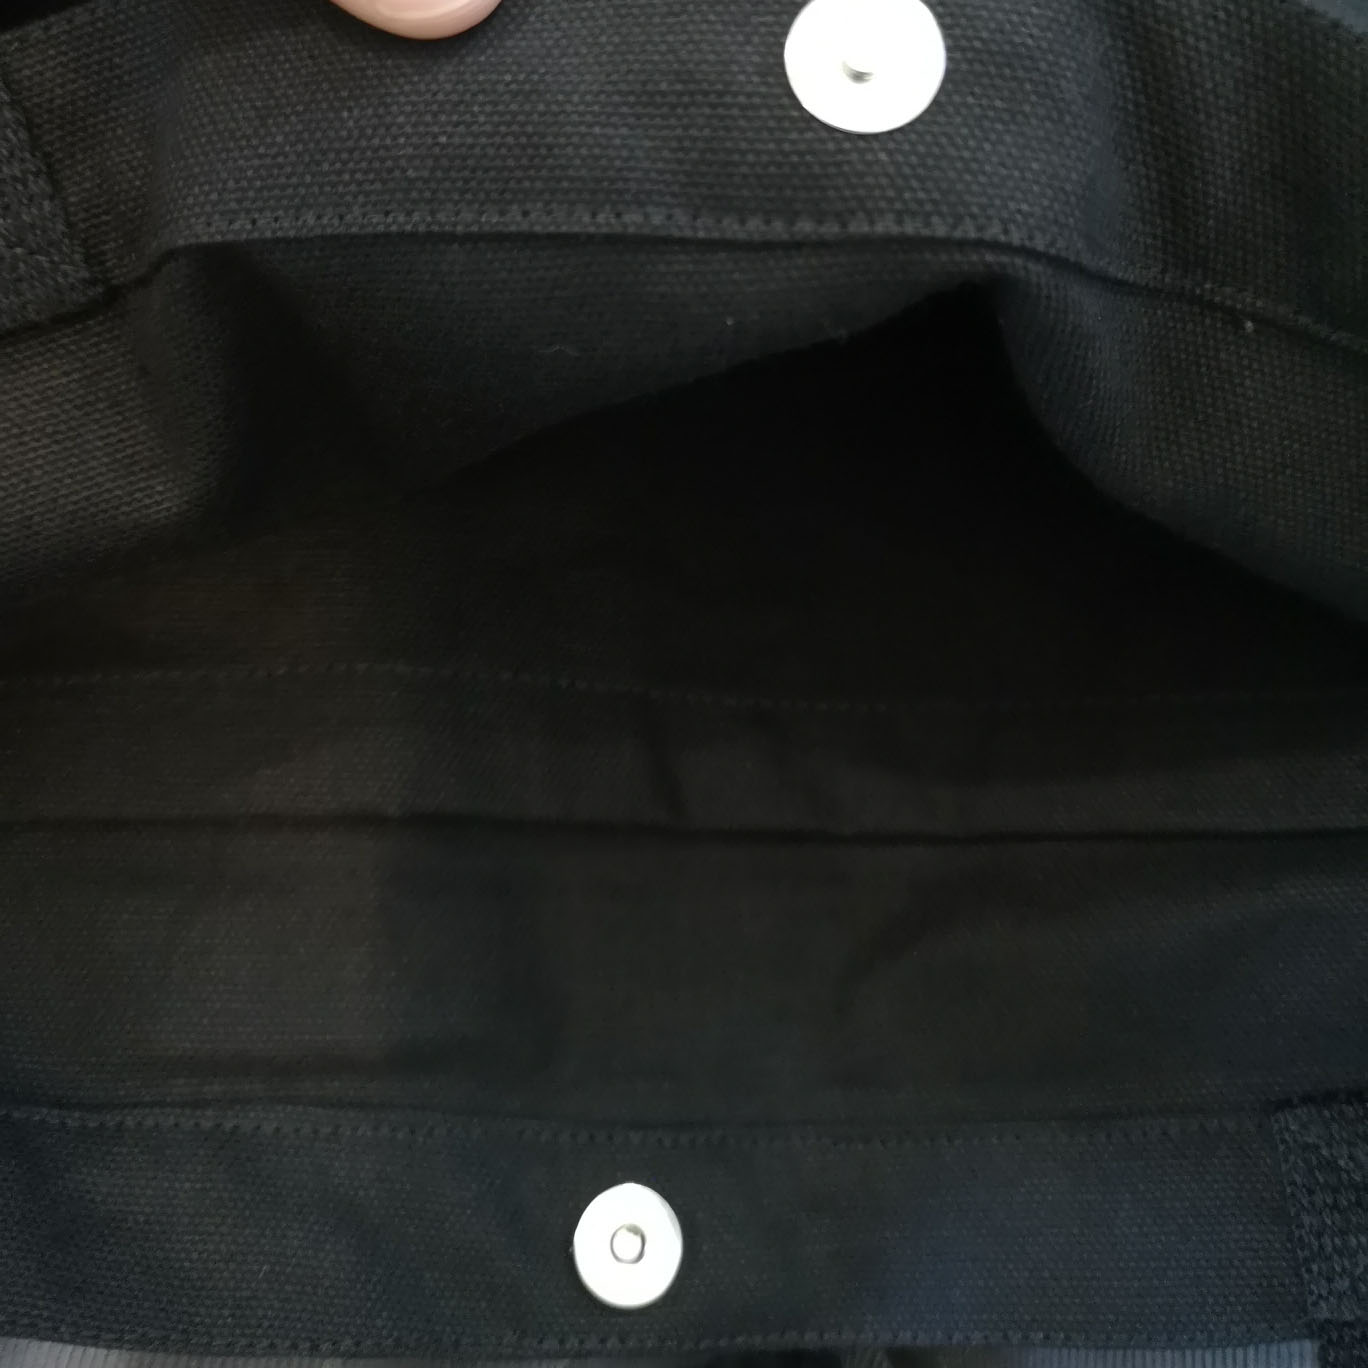 Black Canvas Tote Bag With Leather Tag - Handbag-Asia.com | Luxury ...